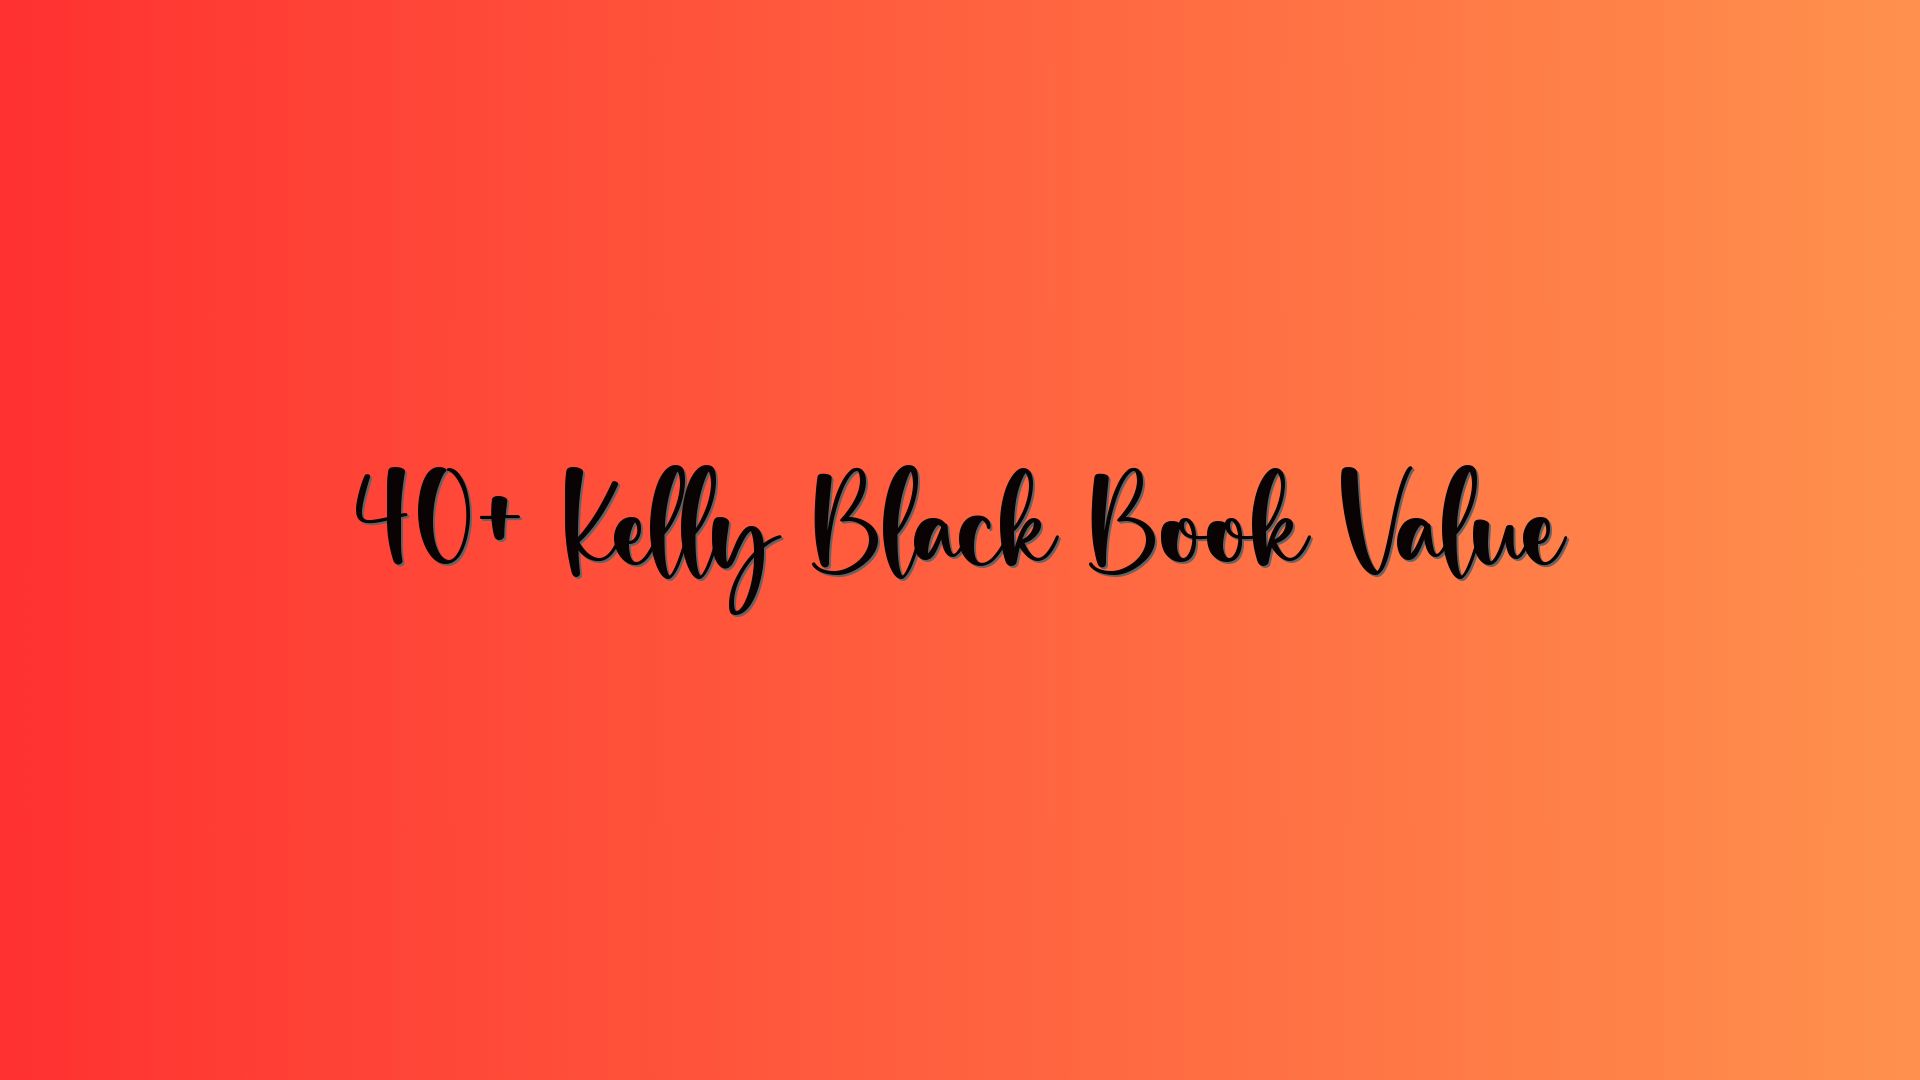 40+ Kelly Black Book Value